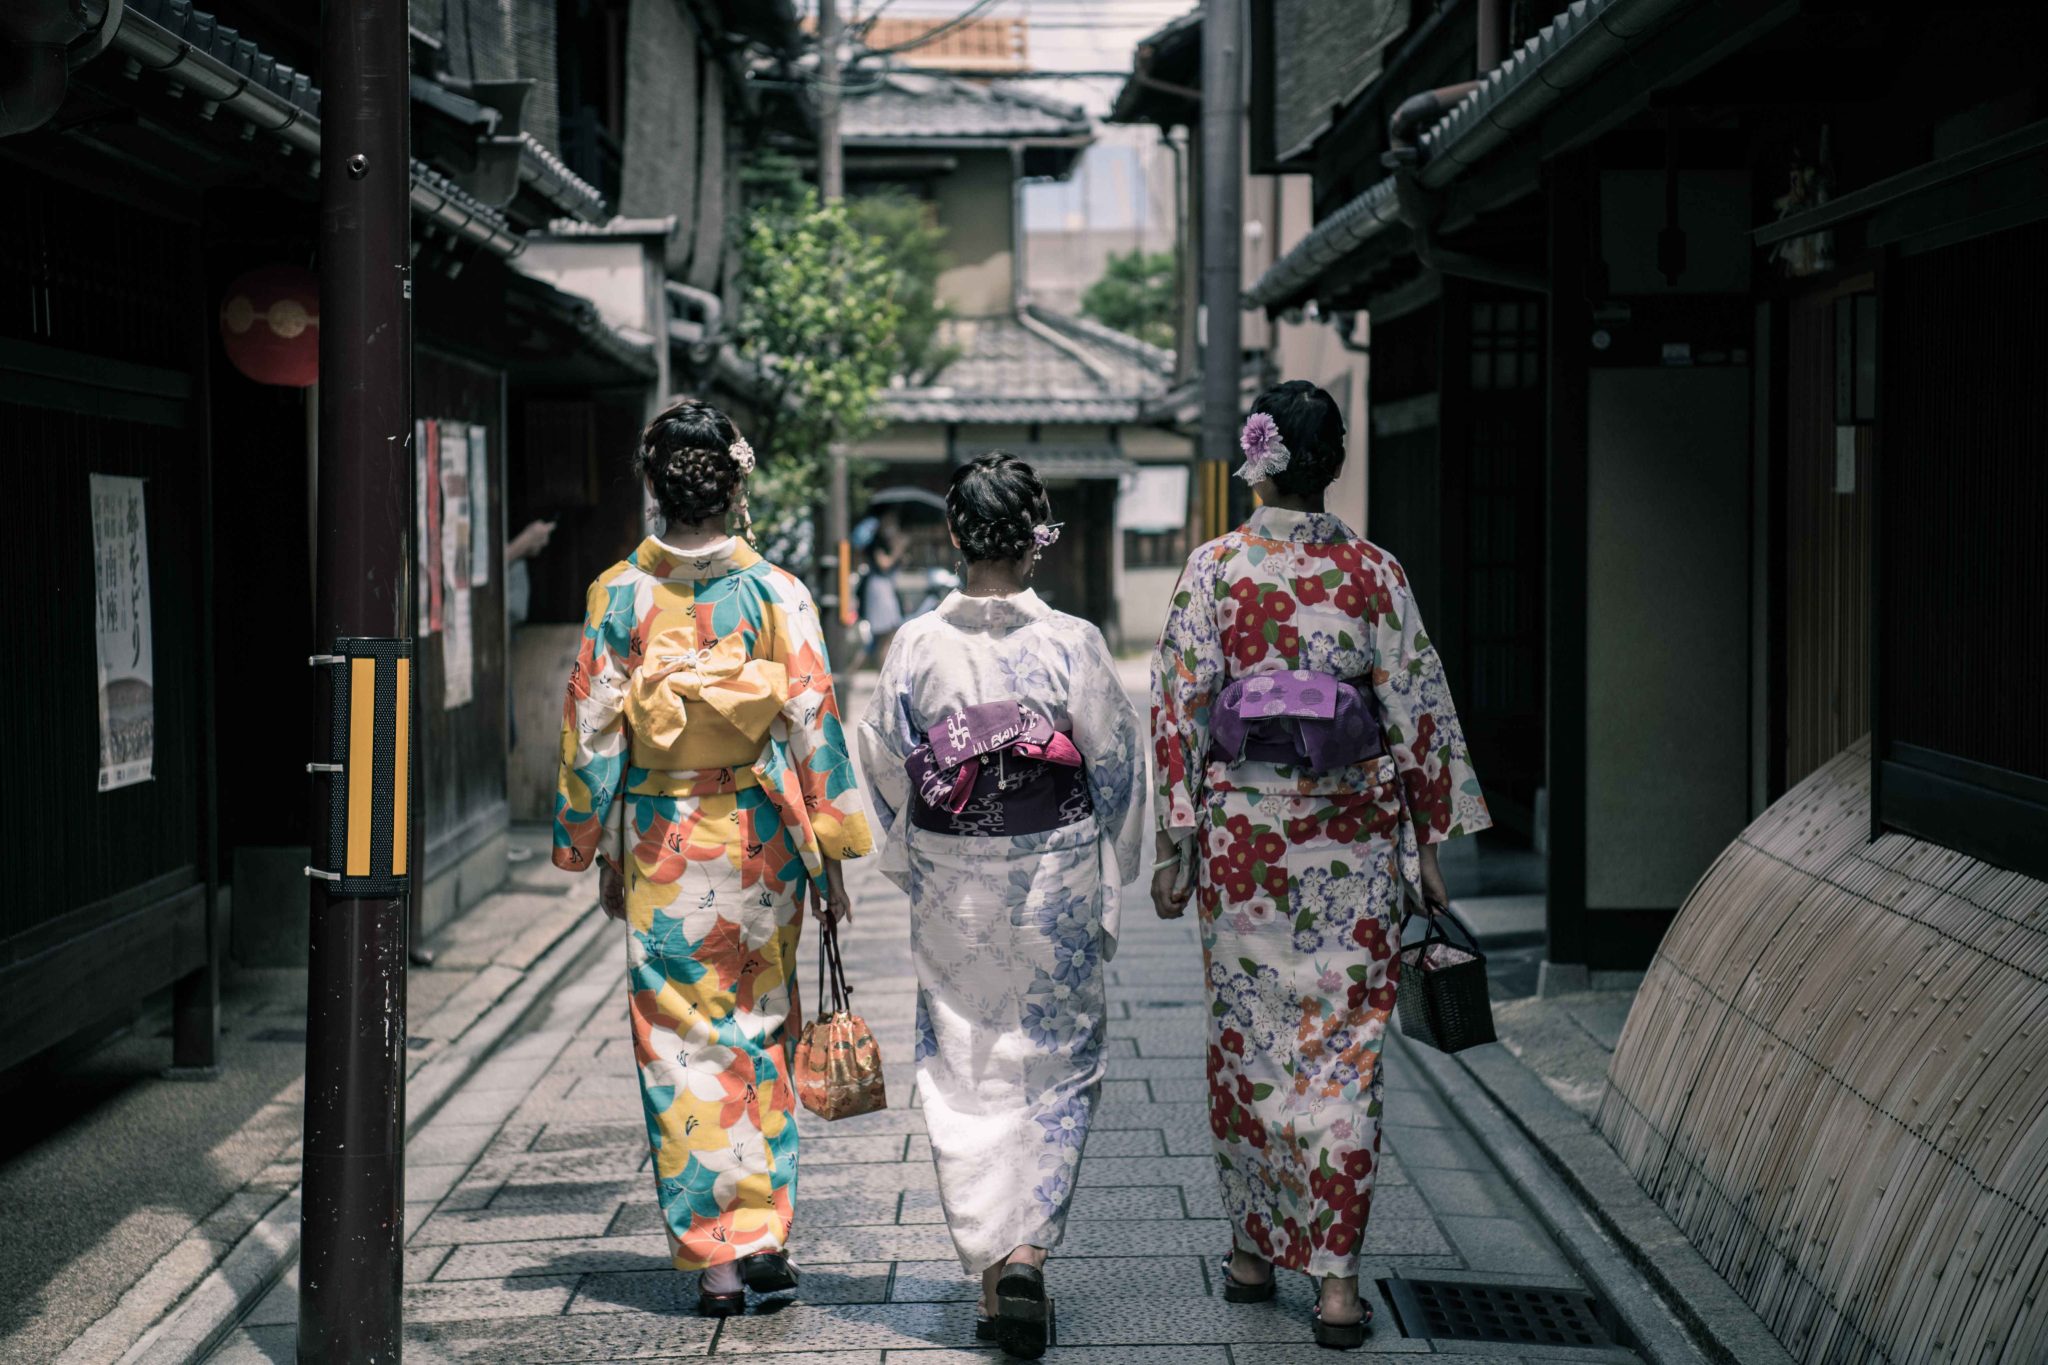 Geishas in Japan walking down a street